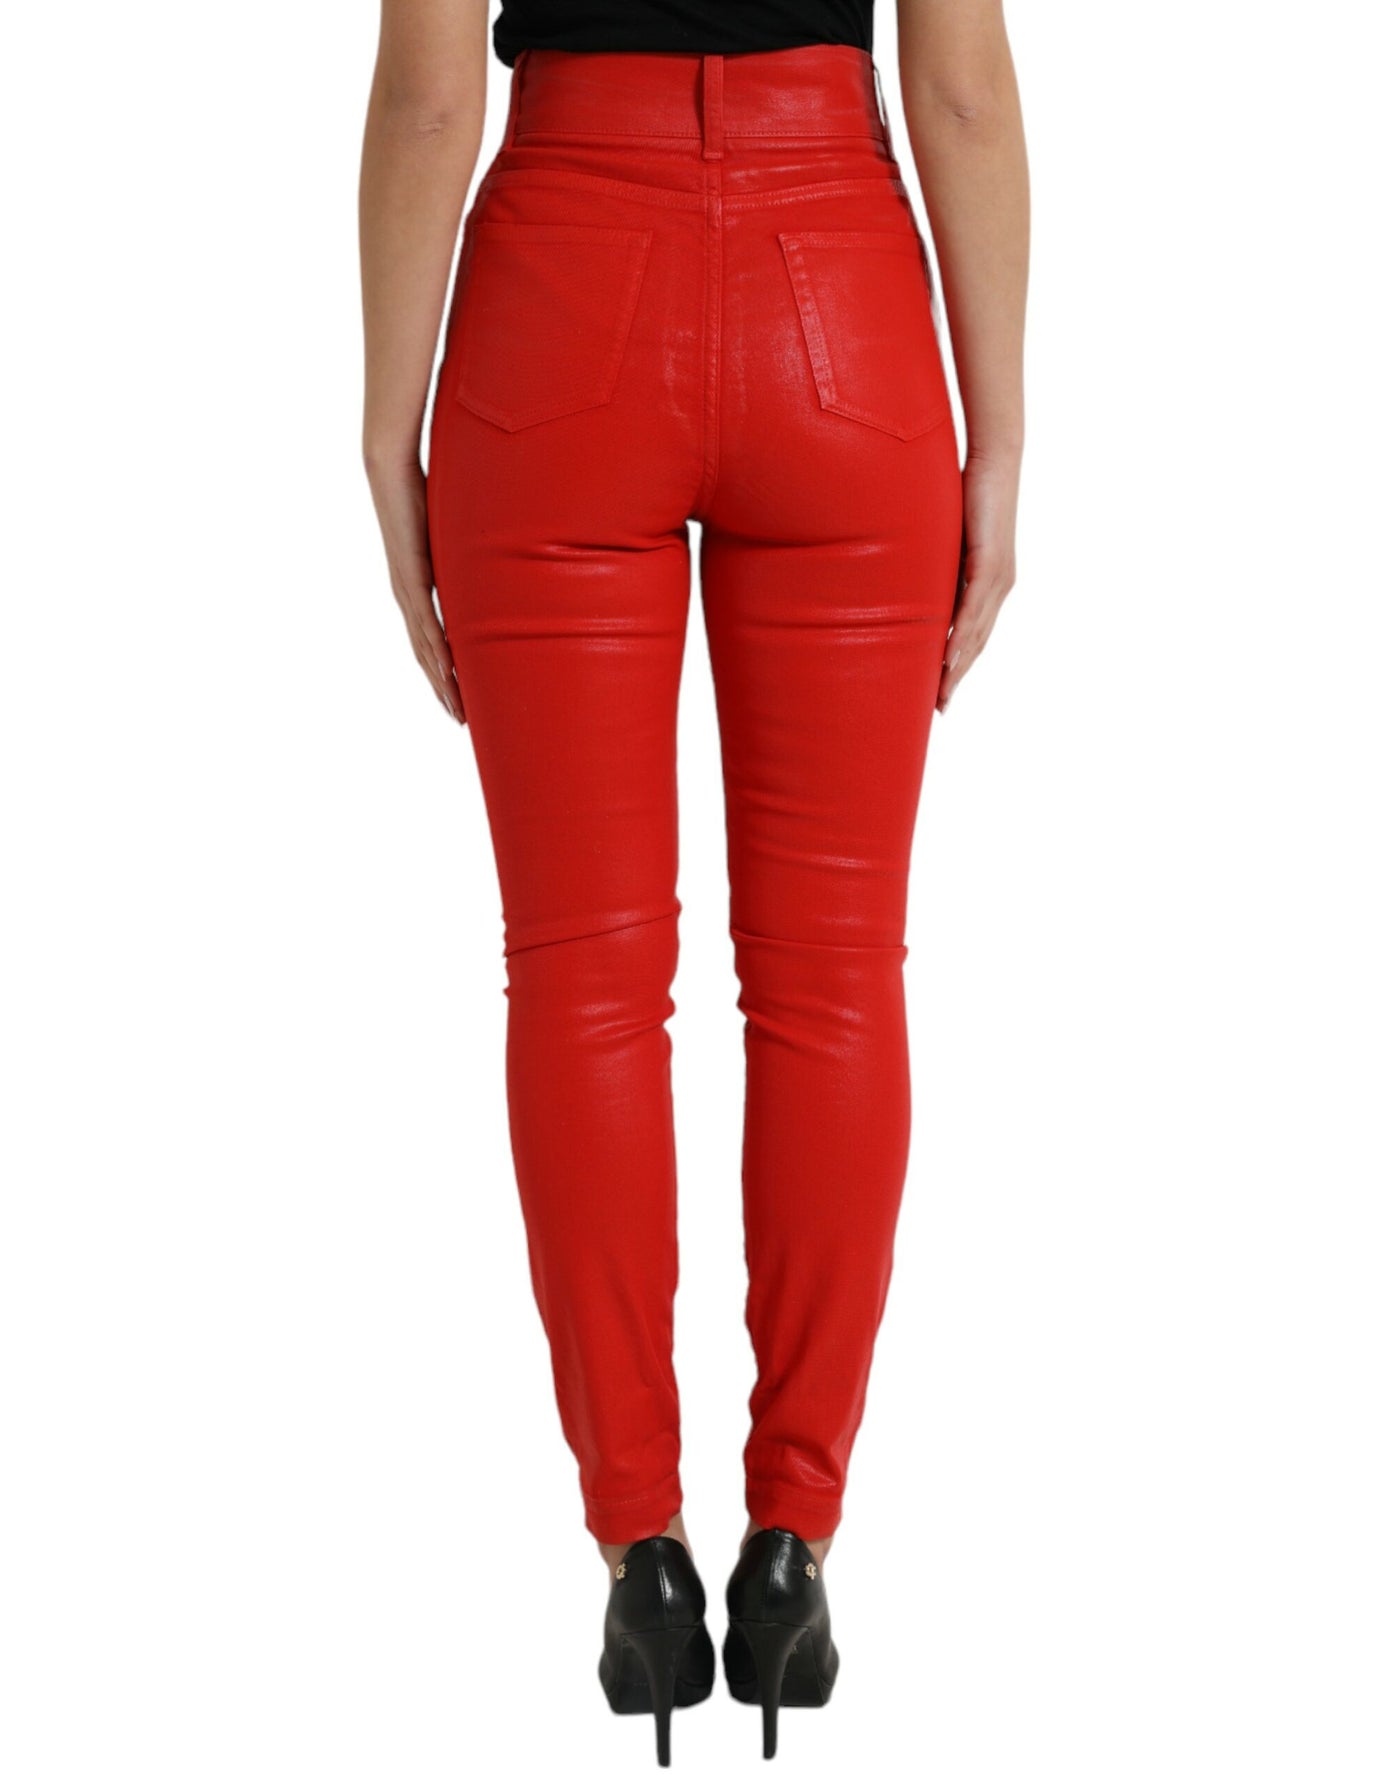 Dolce & Gabbana Red Cotton High Waist Skinny Denim Jeans